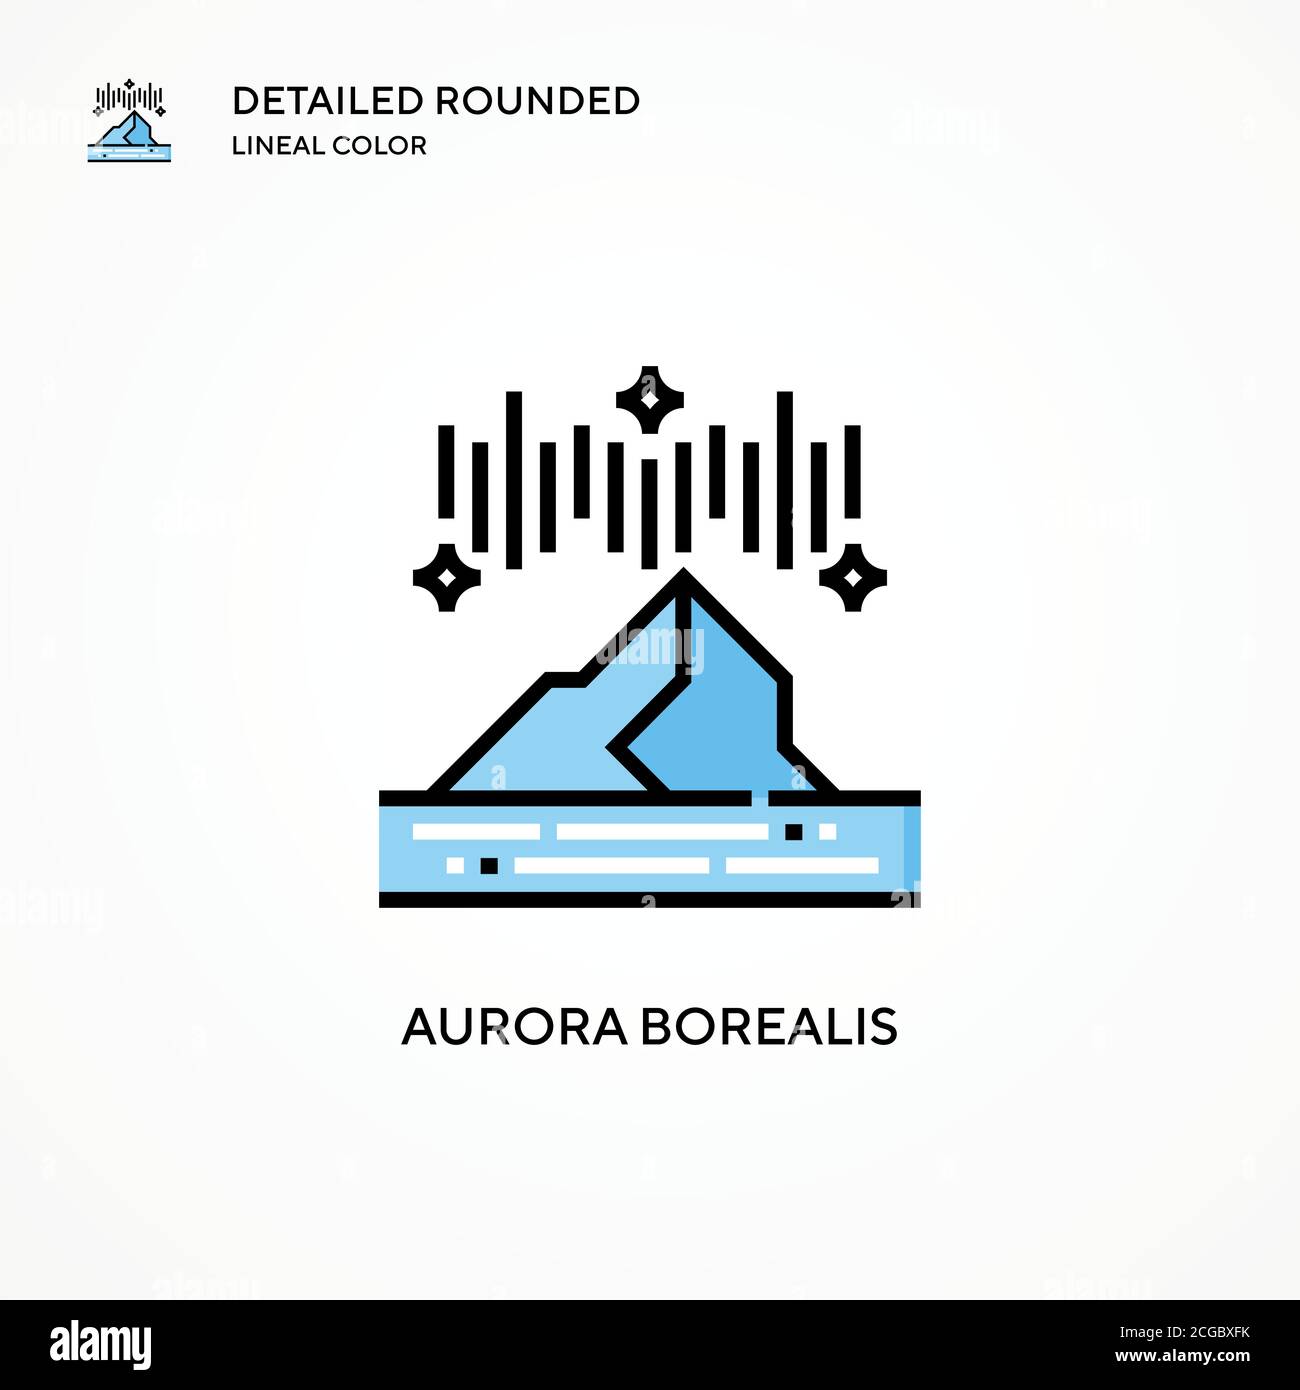 Aurora borealis vector icon. Modern vector illustration concepts. Easy to edit and customize. Stock Vector